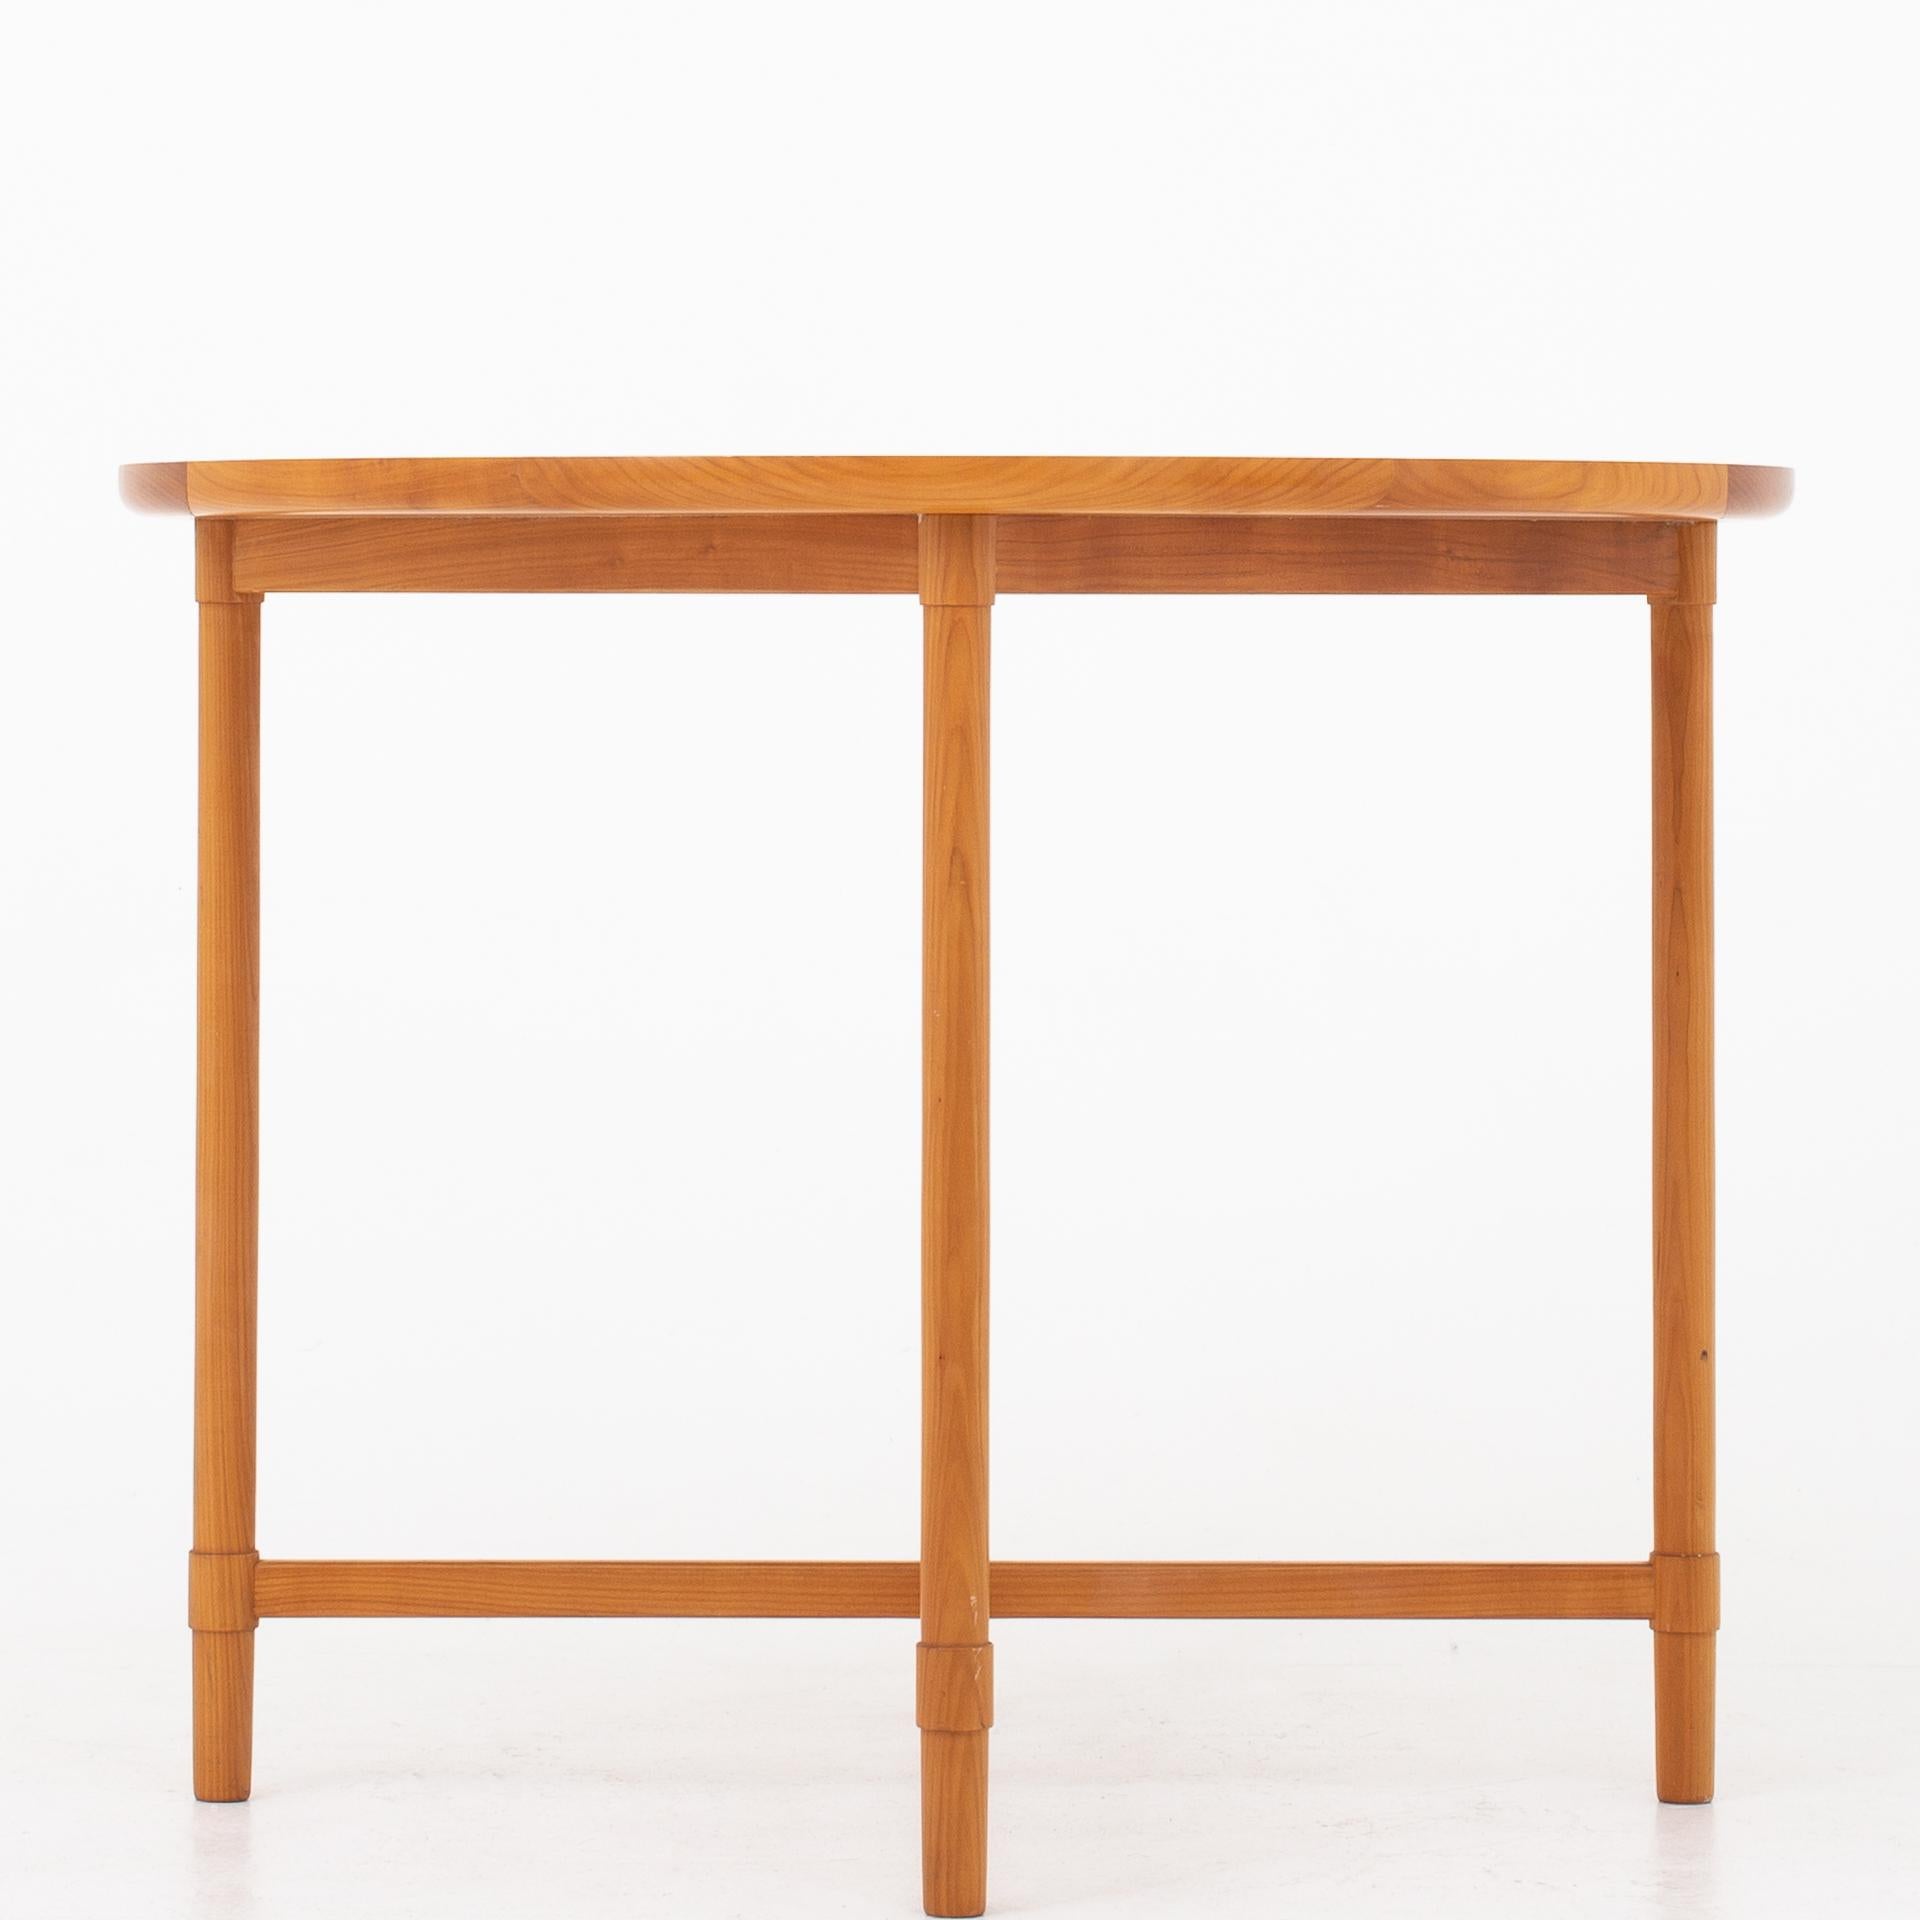 Café table in cherry with cross frame. Maker Søborg Møbelfabrik.